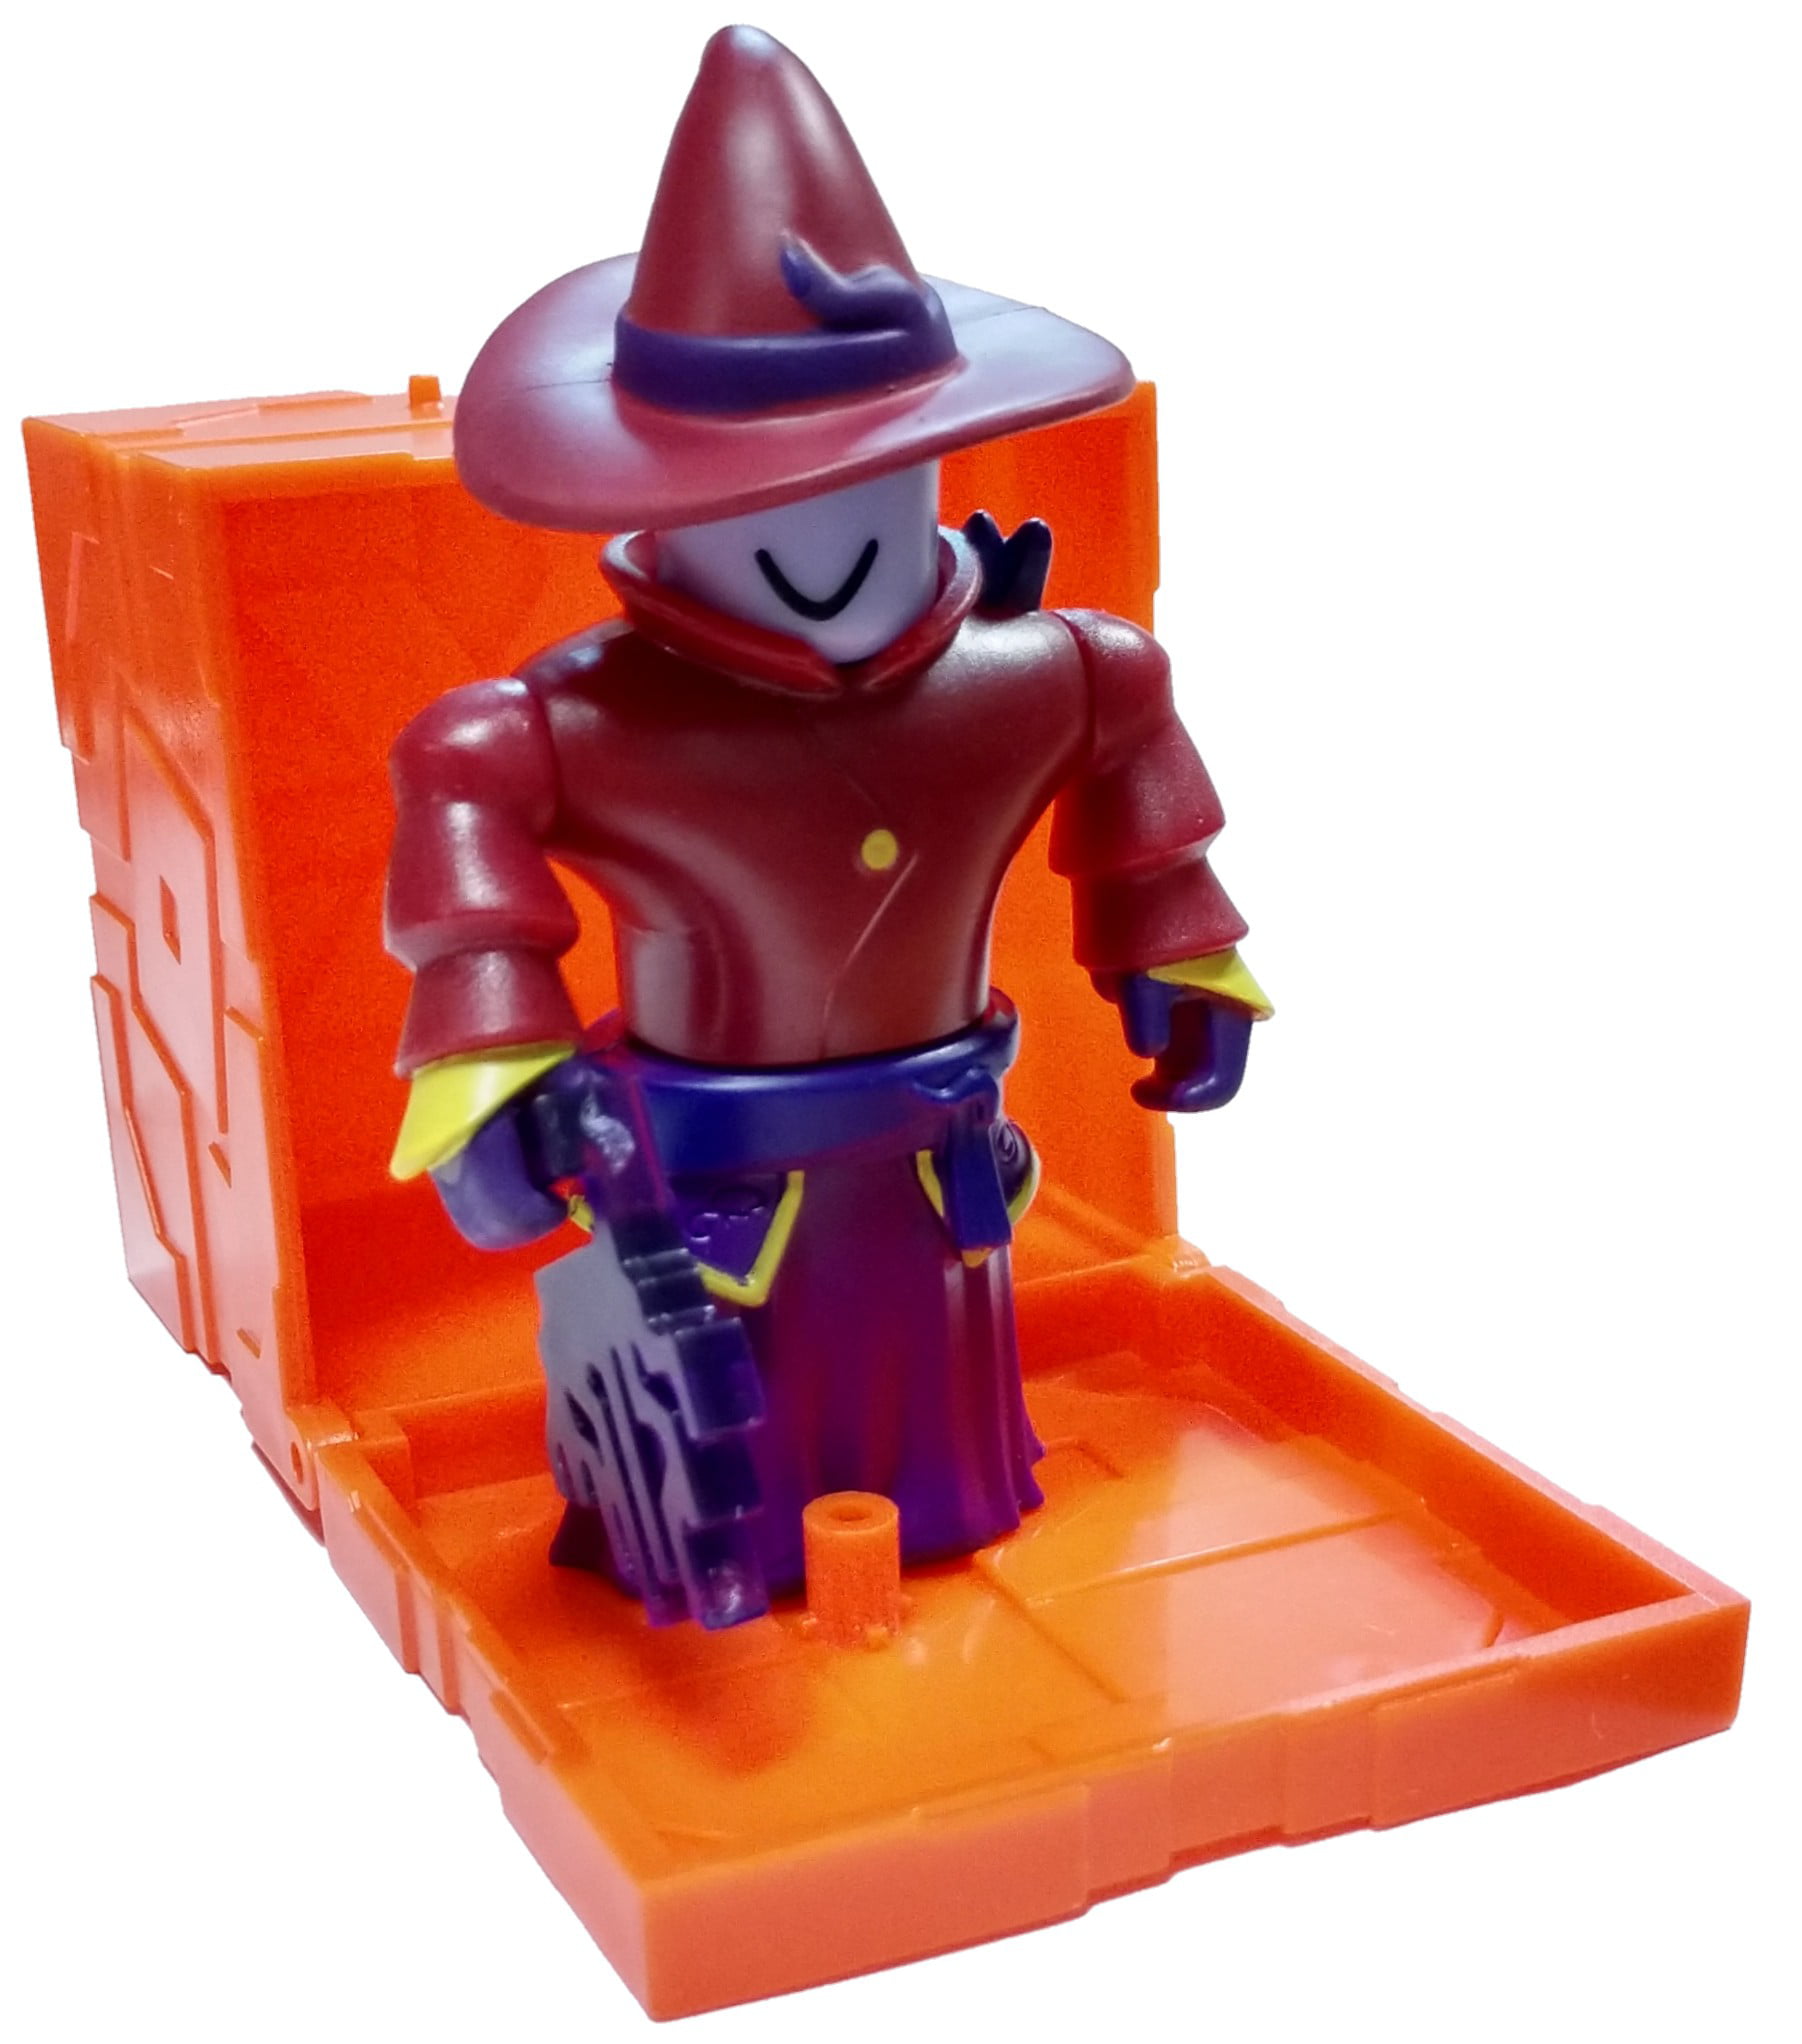 Roblox Series 6 Dread Dark Wizard Mini Figure With Orange Cube And Online Code No Packaging Walmart Com Walmart Com - dread hair roblox